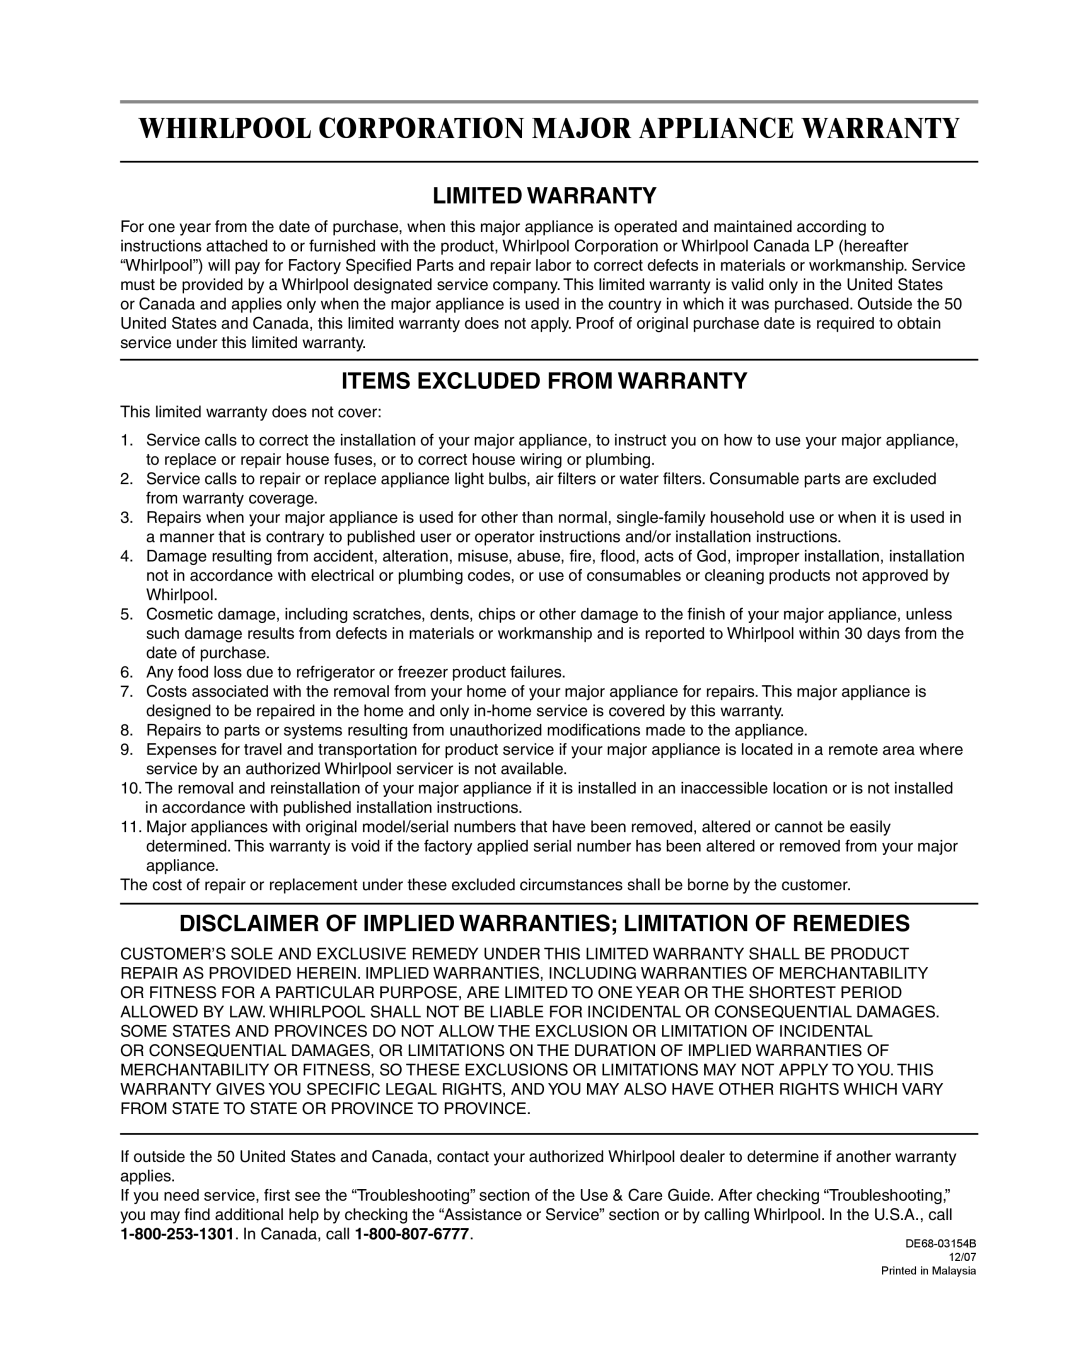 Maytag UMC5200BCS Whirlpool Corporation Major Appliance Warranty, Limited Warranty, Items Excluded From Warranty 